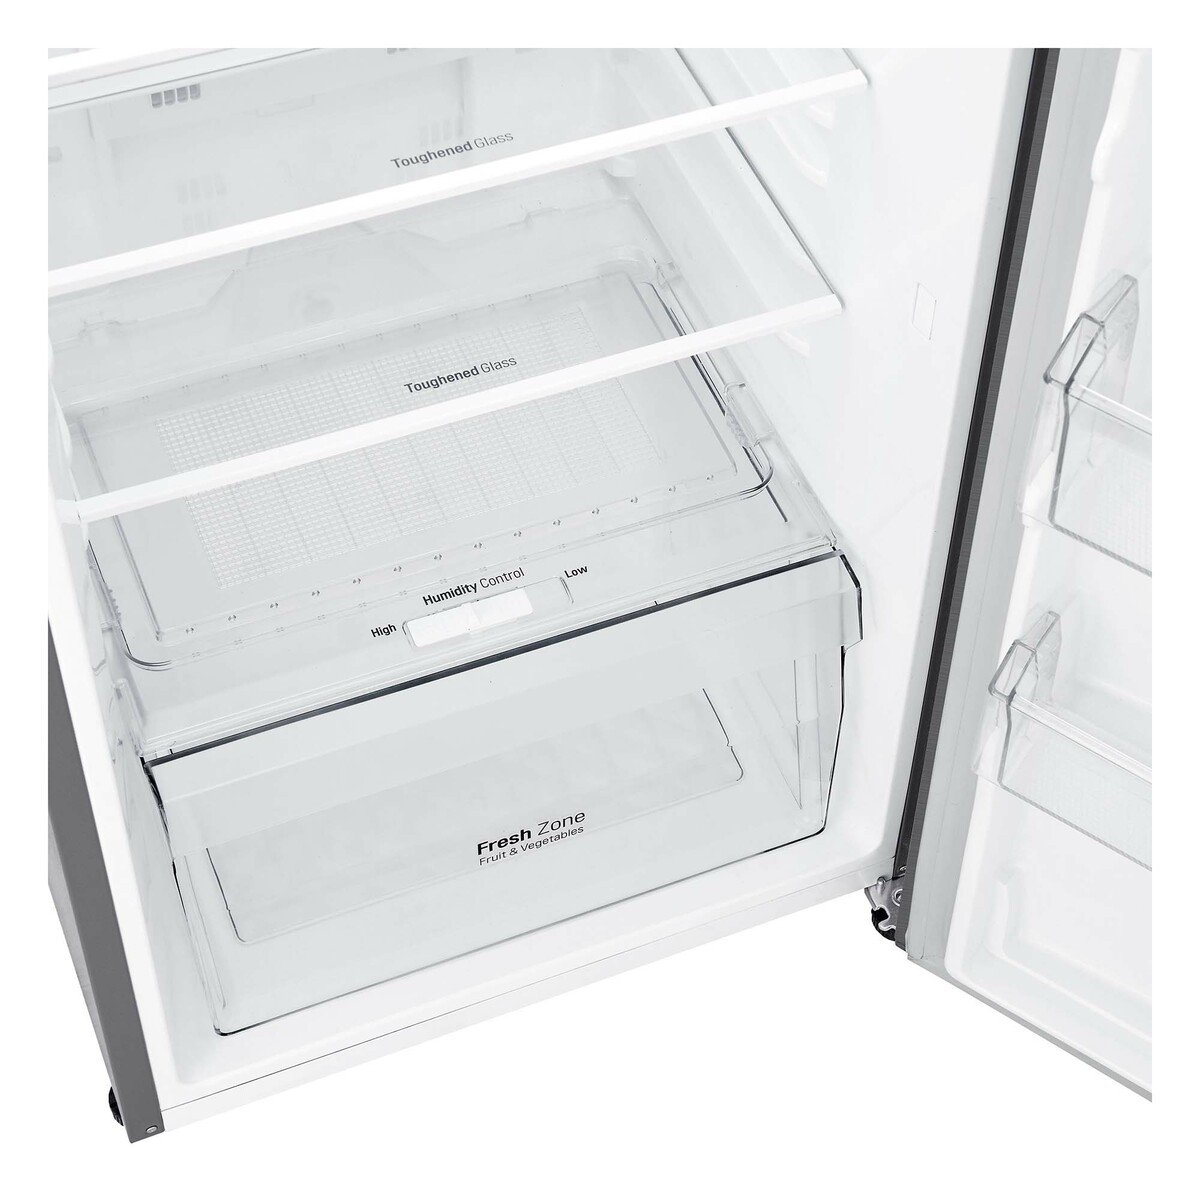 LG Double Door Refrigerator 234LTR, Smart Inverter Compressor, Multi Air Flow, Smart Diagnosis™, Platinum Silver, GR-C345SLBB